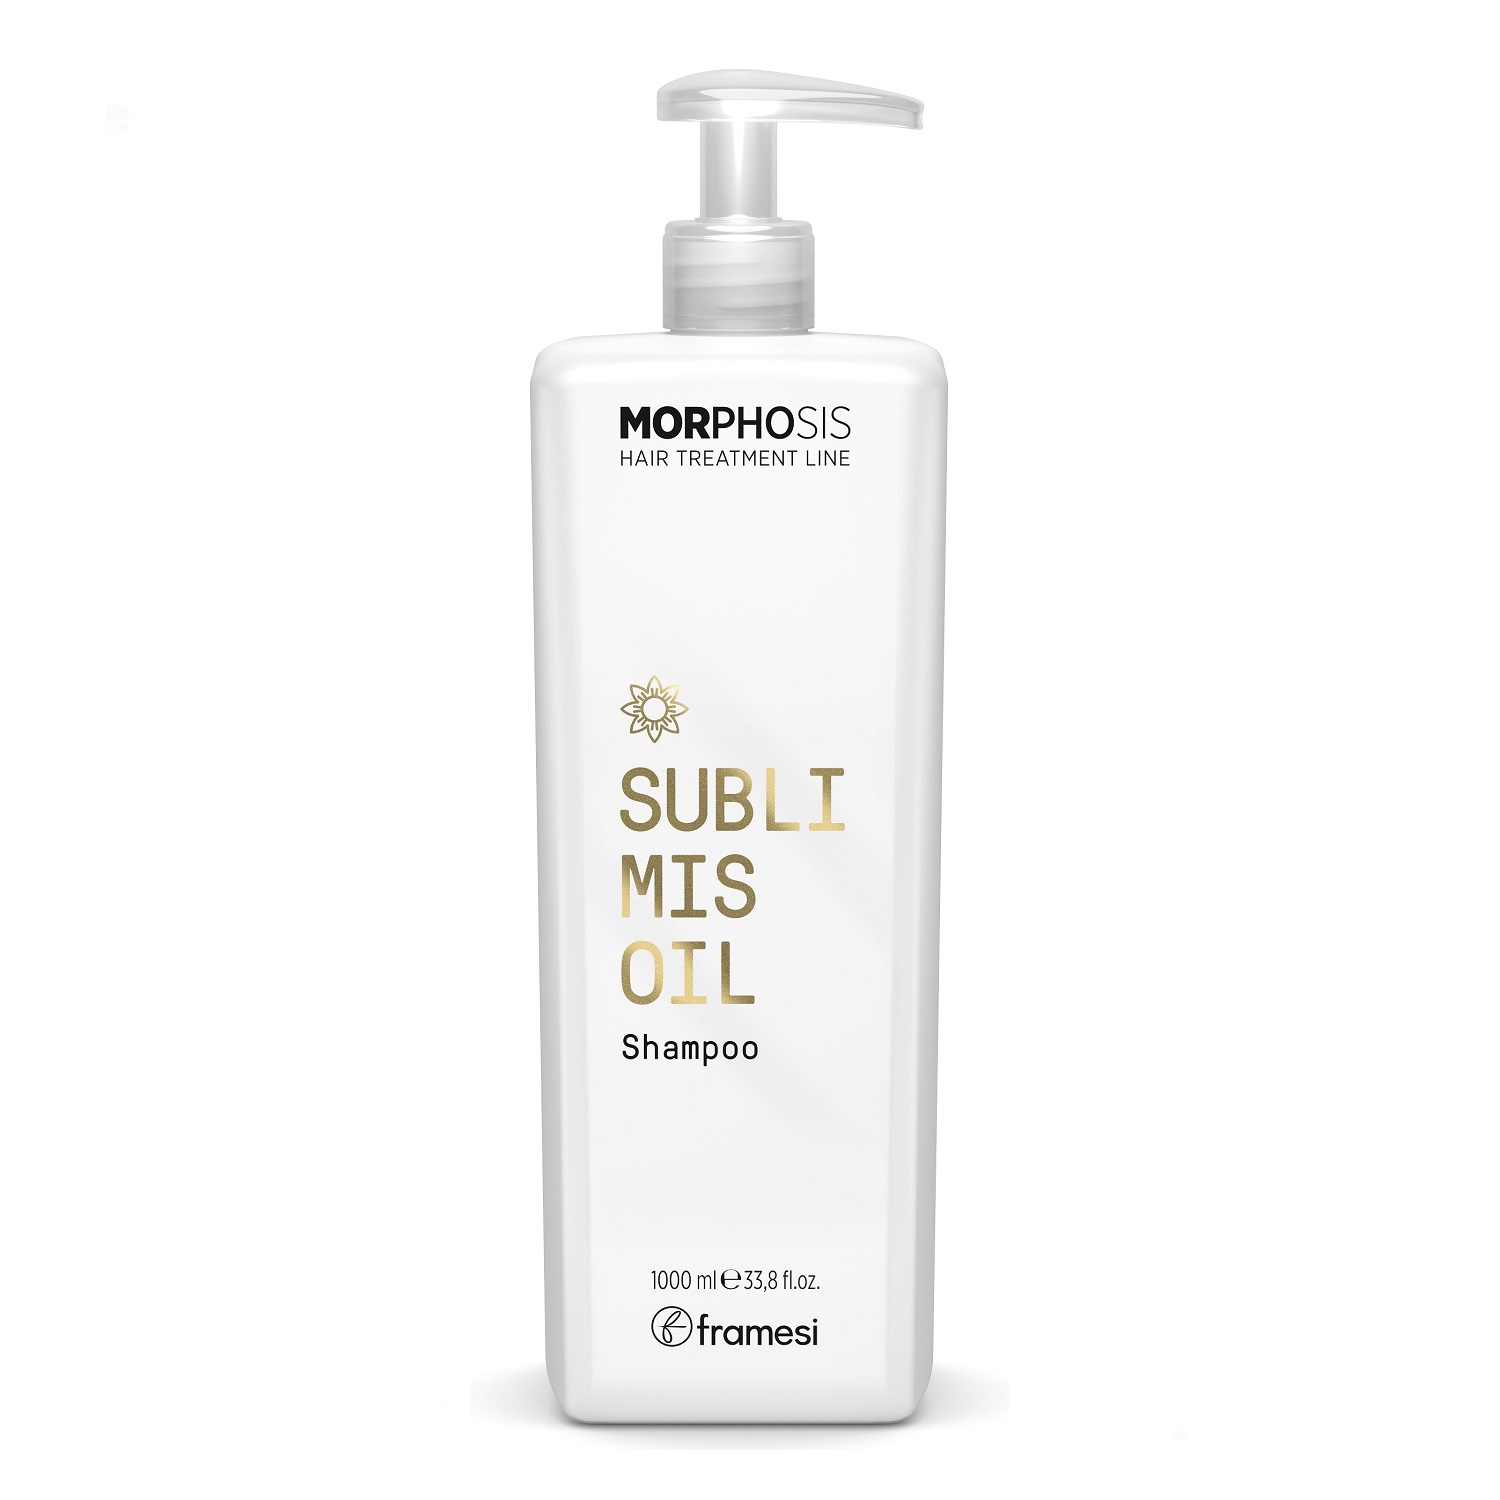 FRAMESI Шампунь на основе арганового масла Sublimis Oil Shampoo, 1000 мл (FRAMESI, Morphosis)